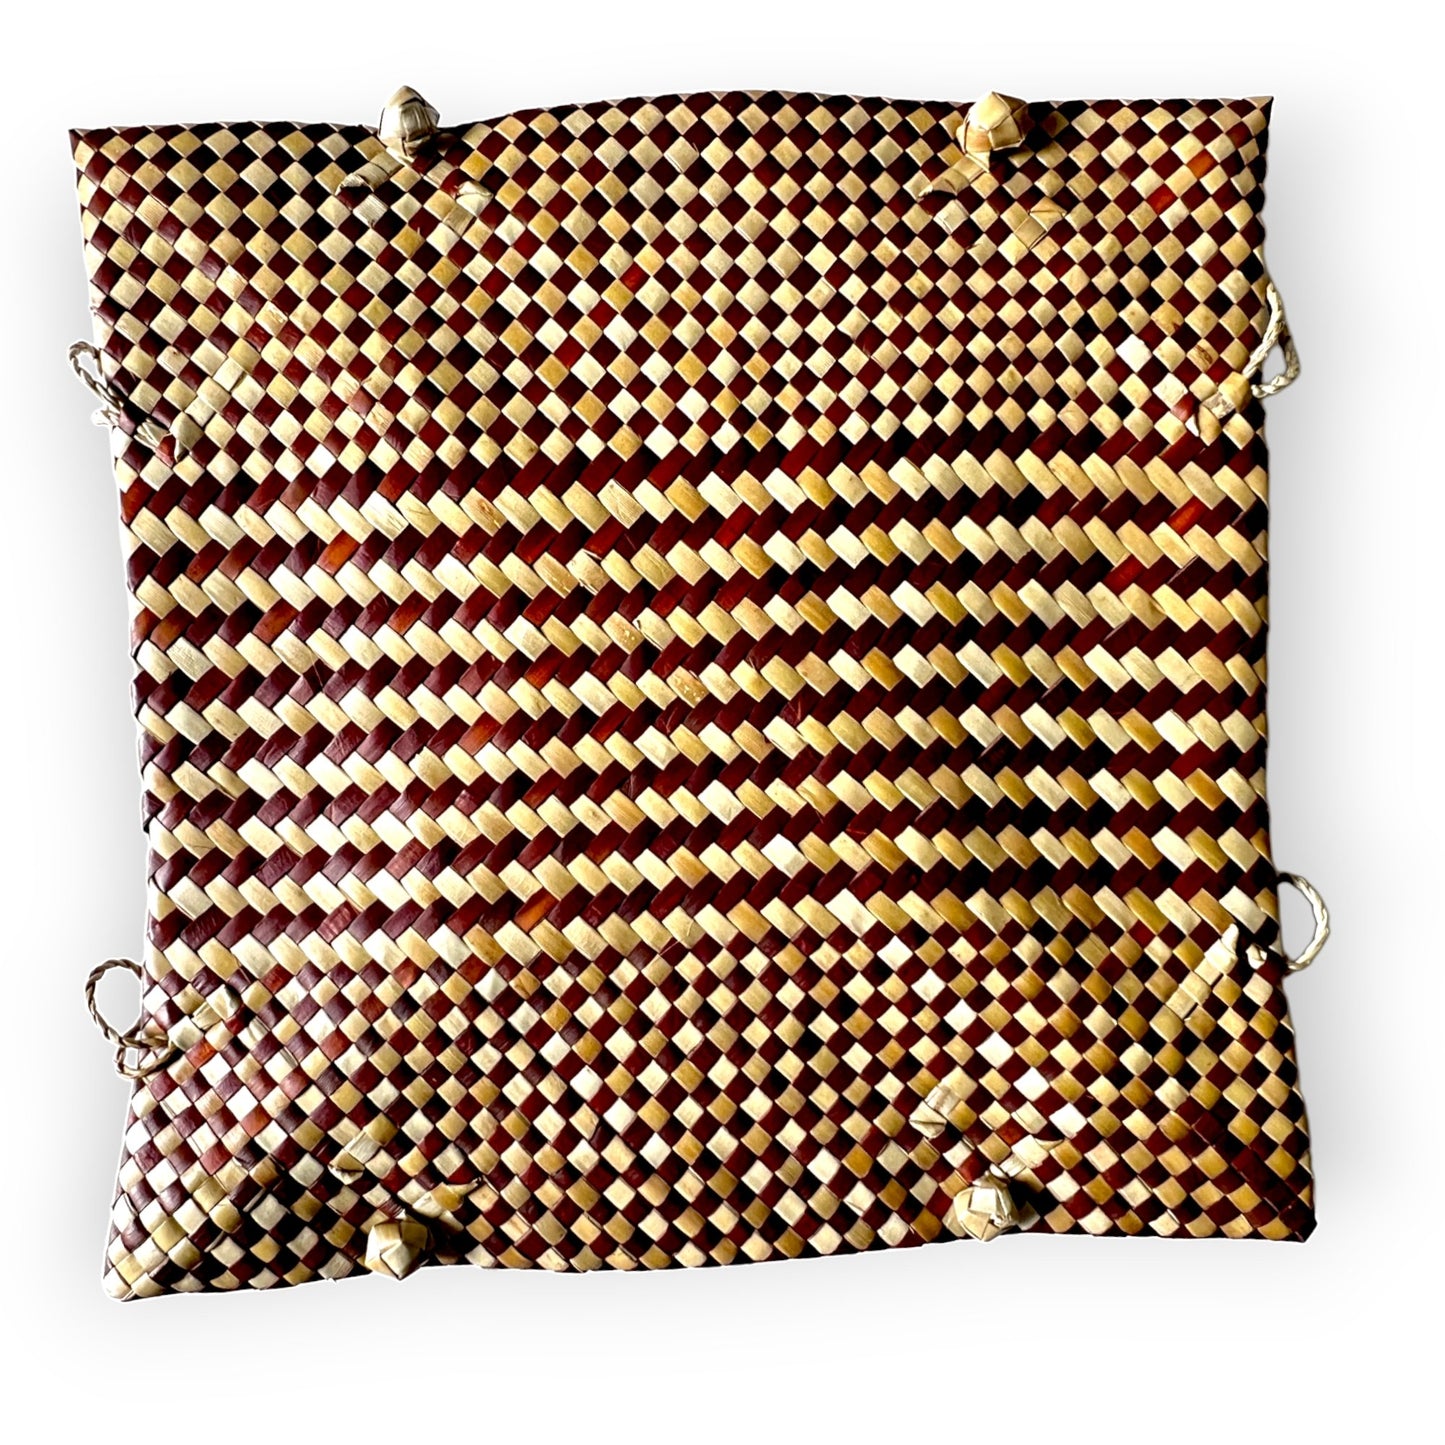 Trio of colorful handwoven fiber nested baskets - Sundara Joon